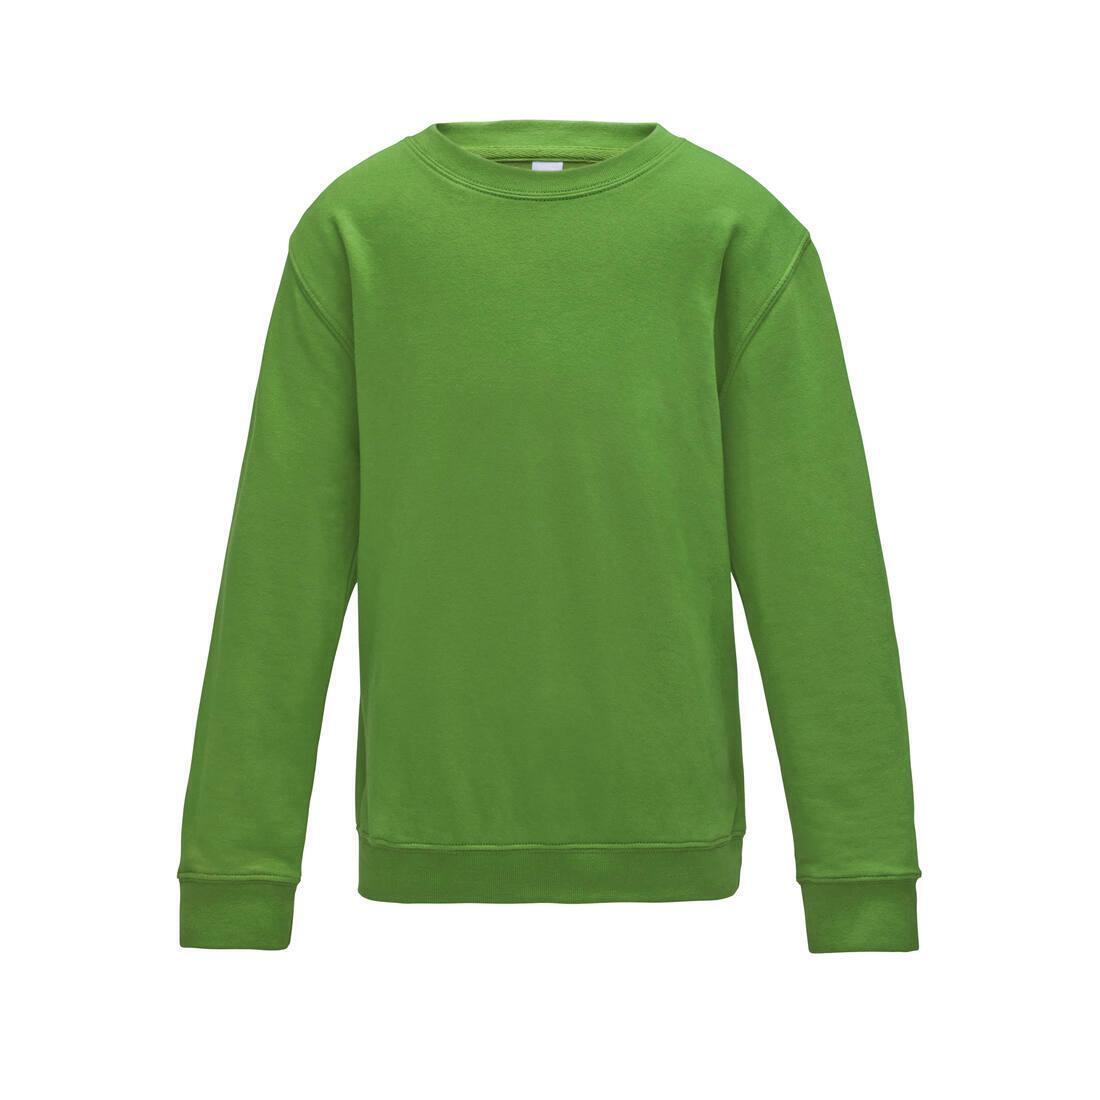 Kinder sweatshirts lime green personaliseer je sweatshirts